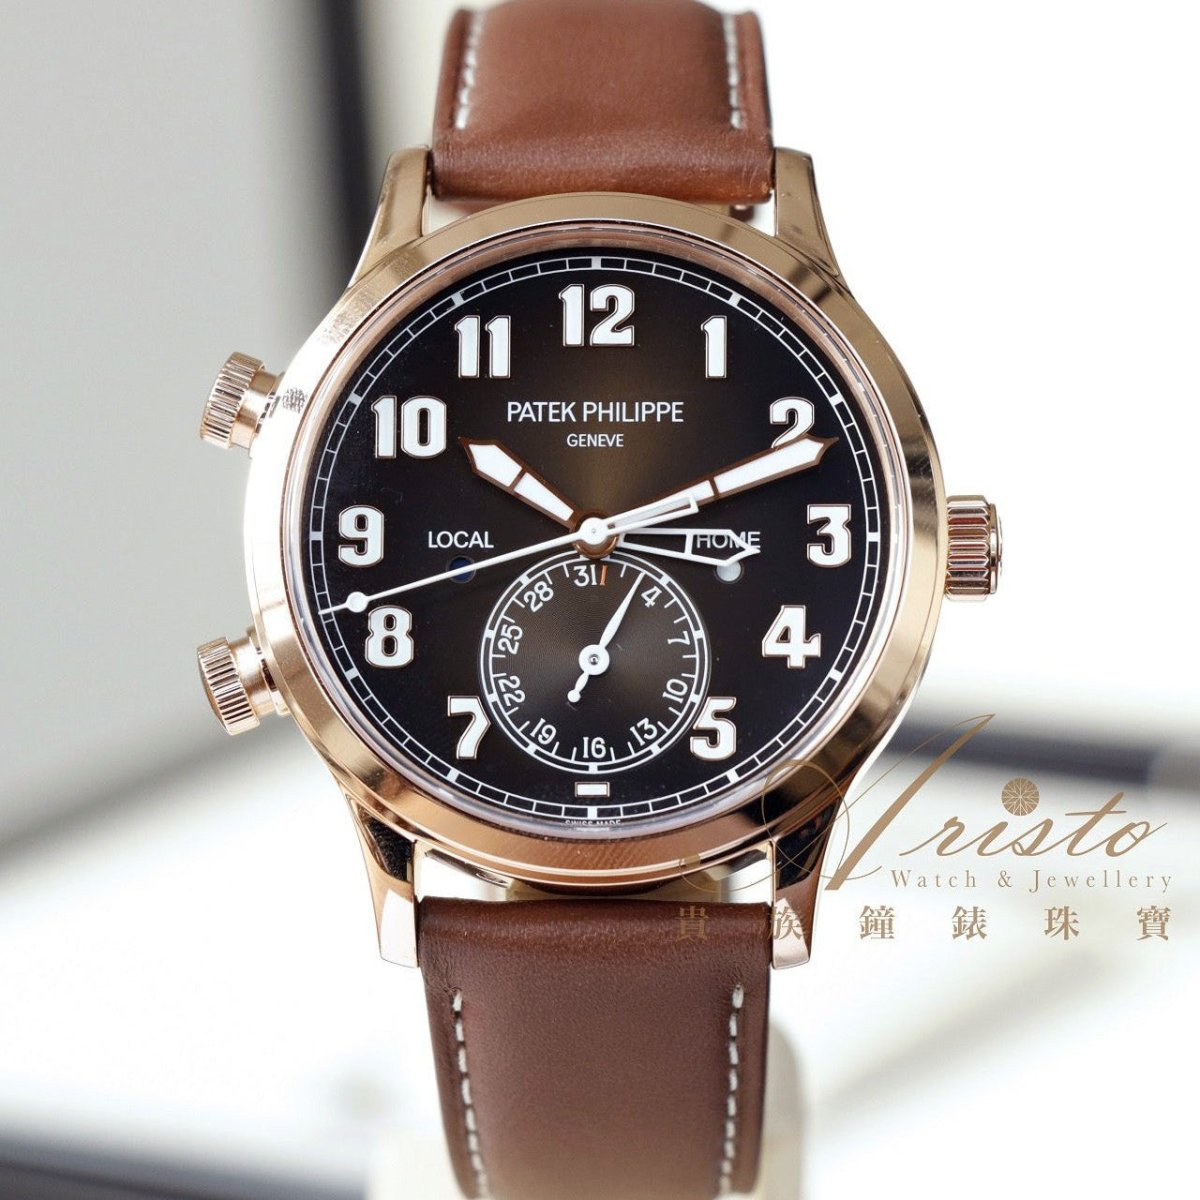 PP 5524R-001 Complications- Aristo Watch & Jewellery